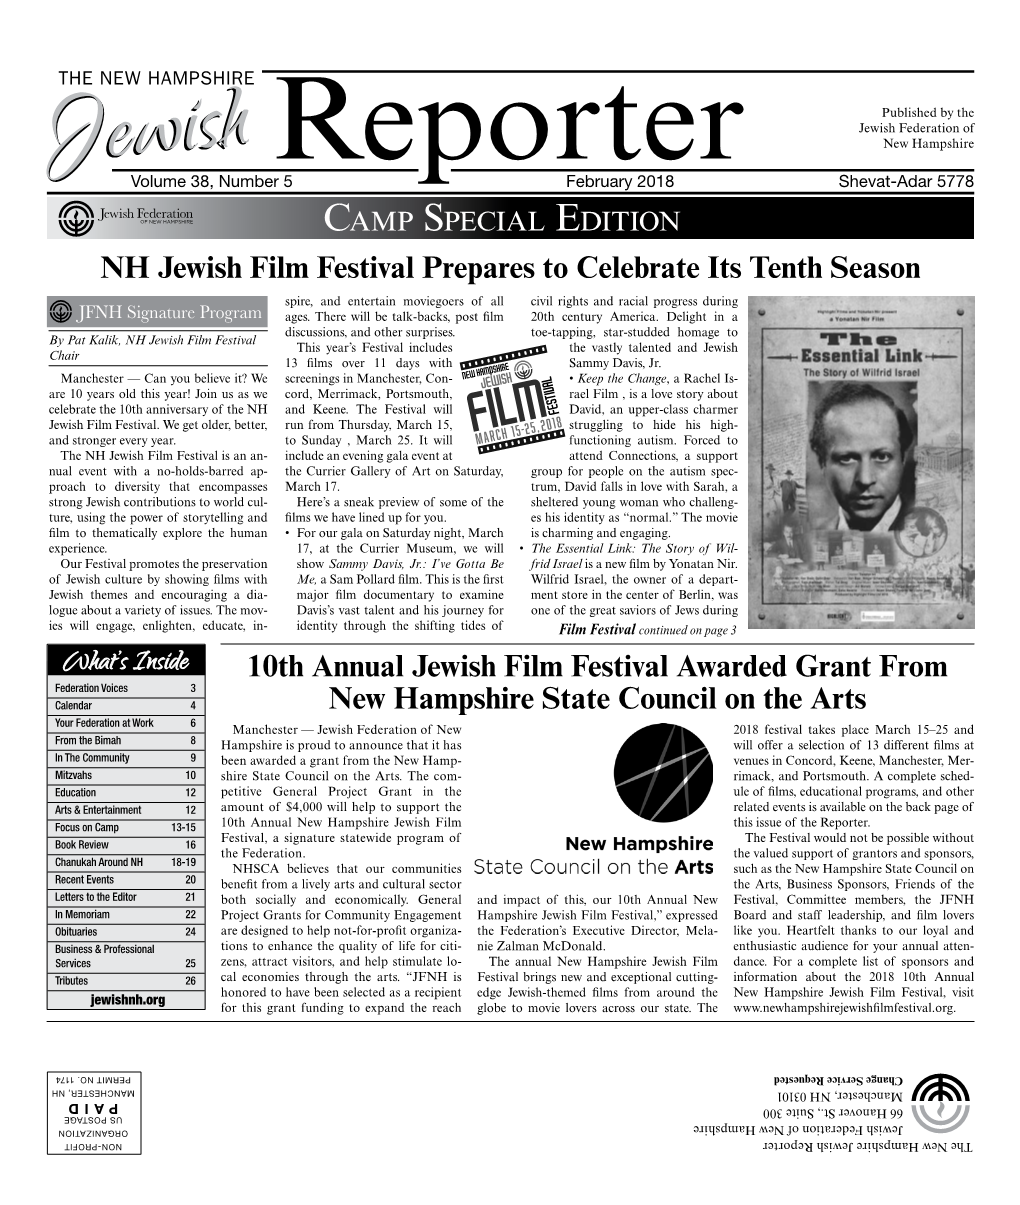 NH Jewish Film Festival Prepares to Celebrate Its Tenth Season 10Th Annual Jewish Film Festival Awarded Grant from New Hampshire